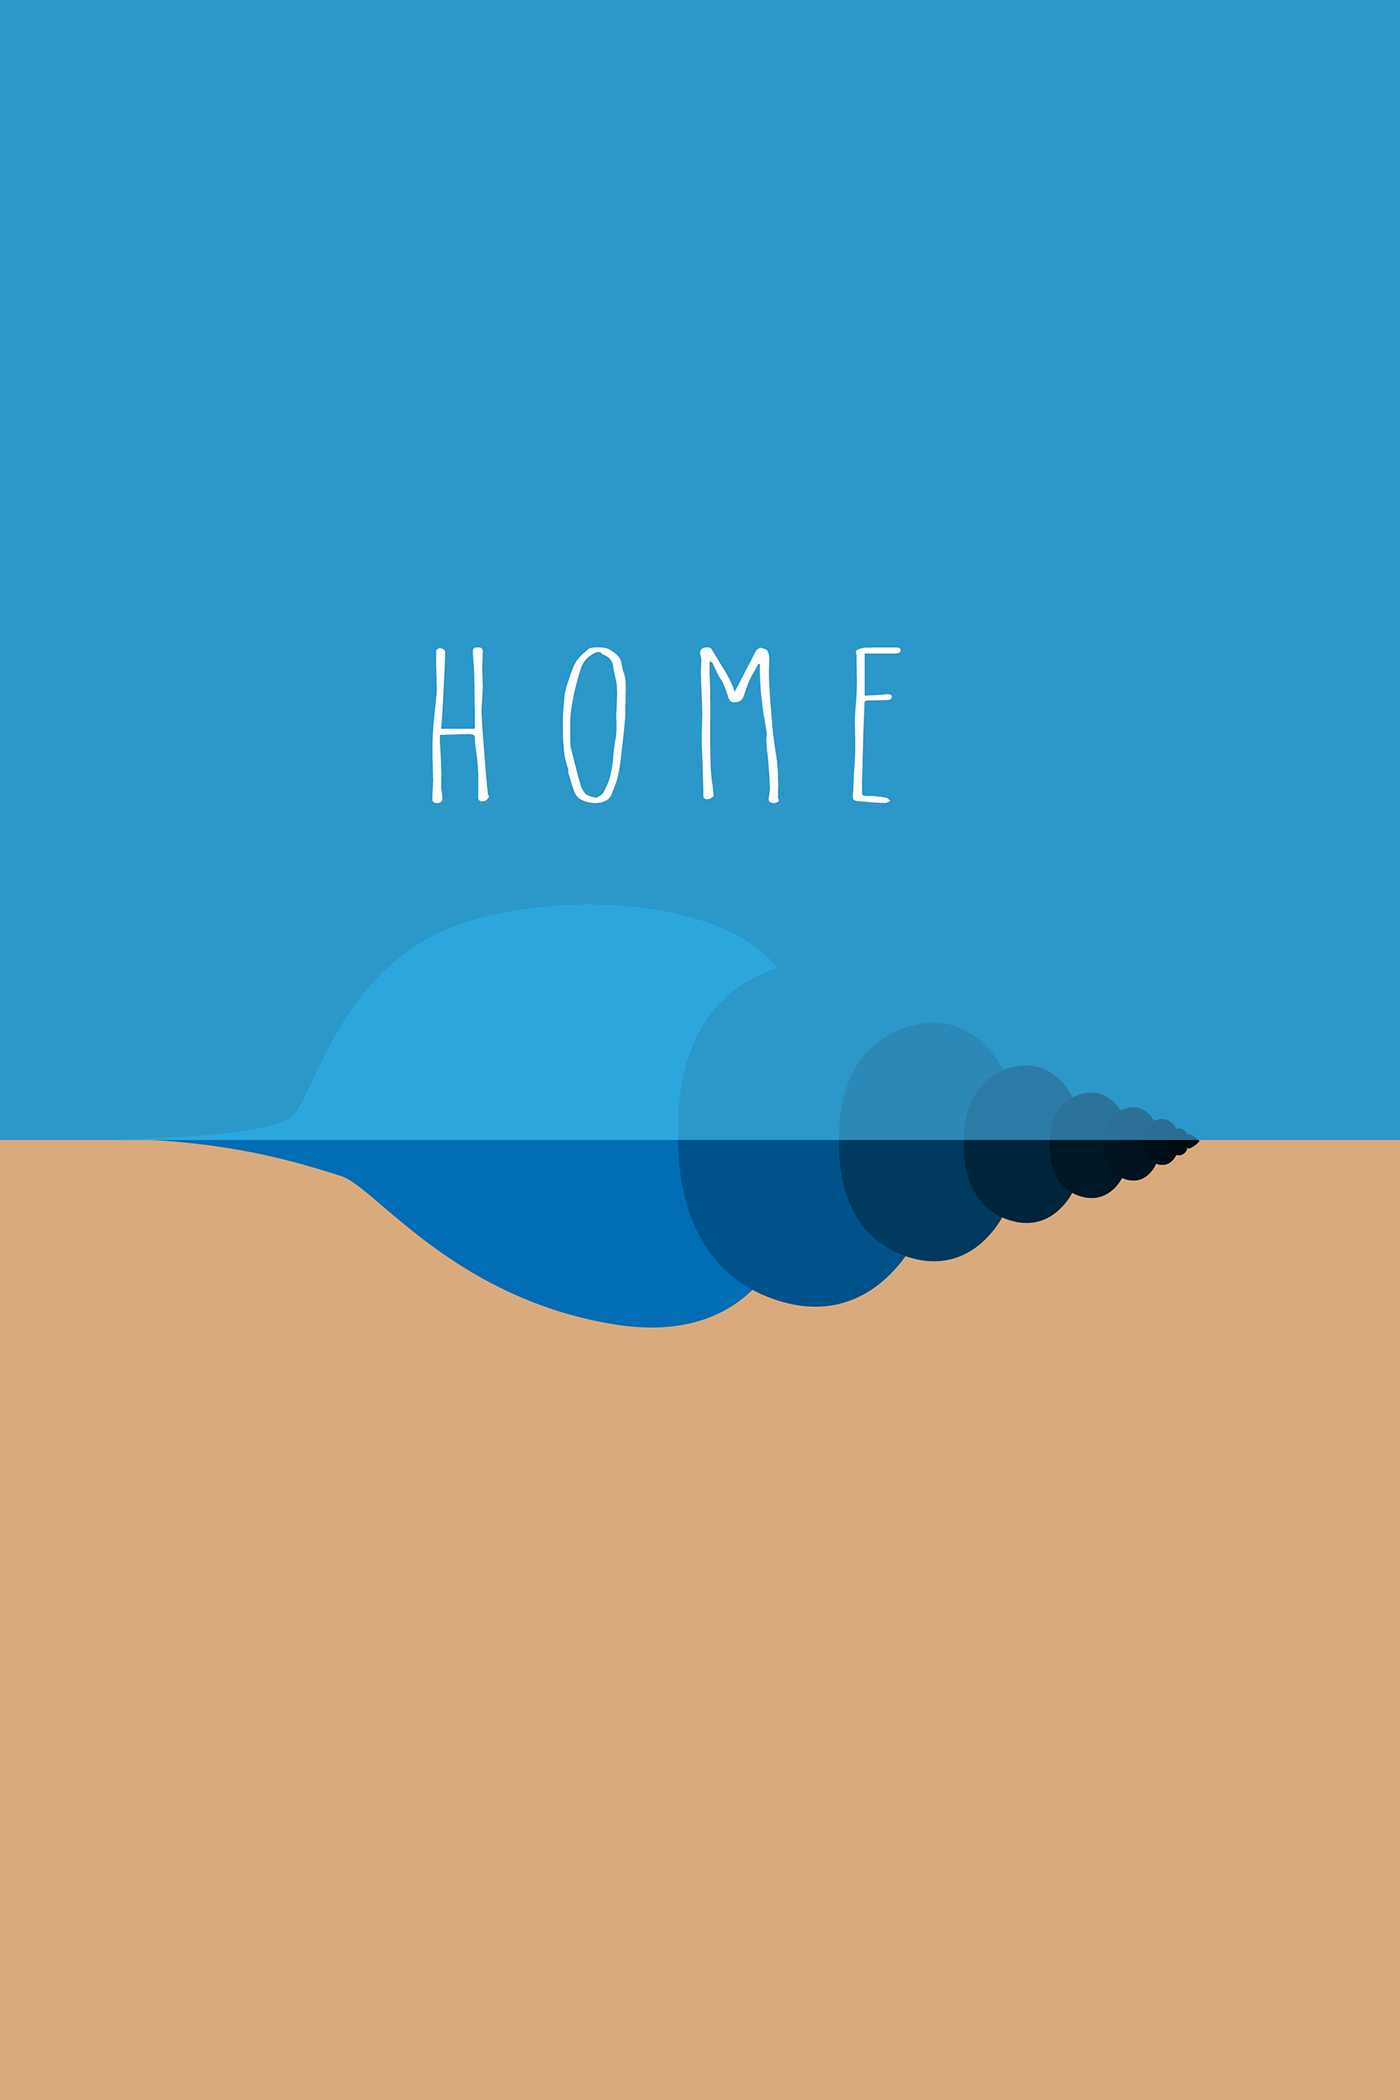 cyclades Greece Island symbolism poster design sea seascape Landscape summer blue Illustrator